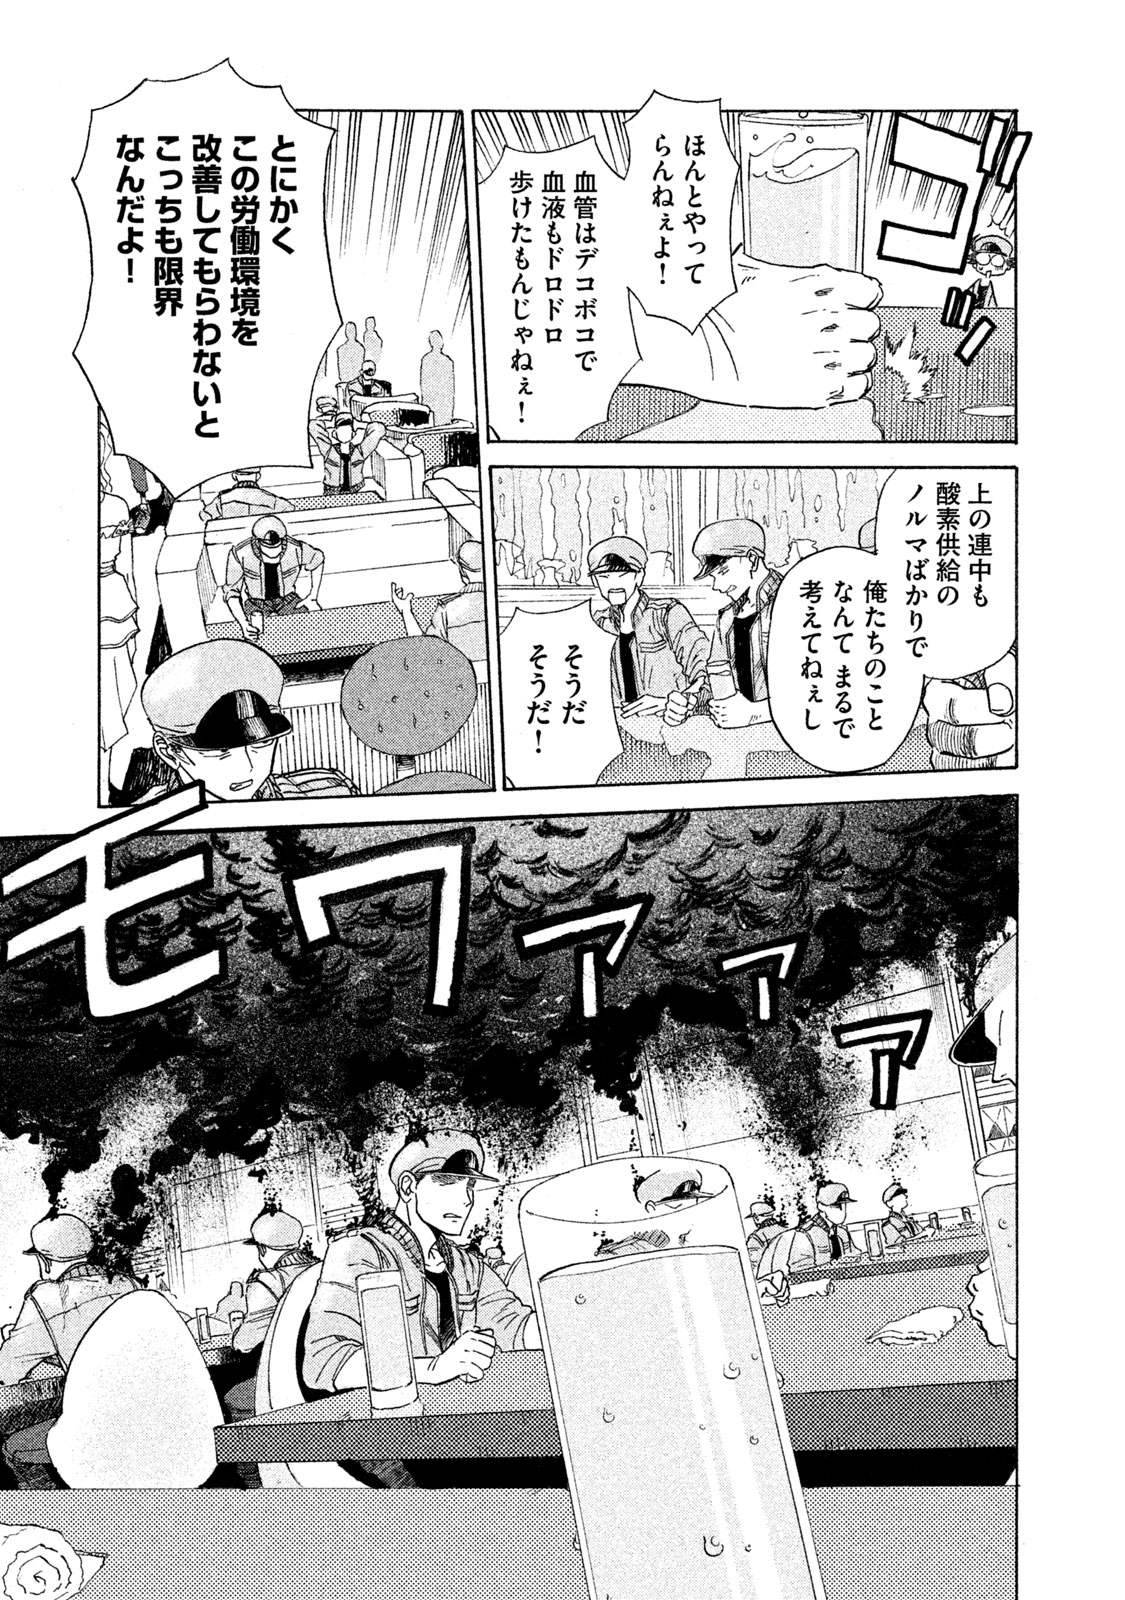 Hataraku Saibou BLACK - Chapter 2 - Page 15